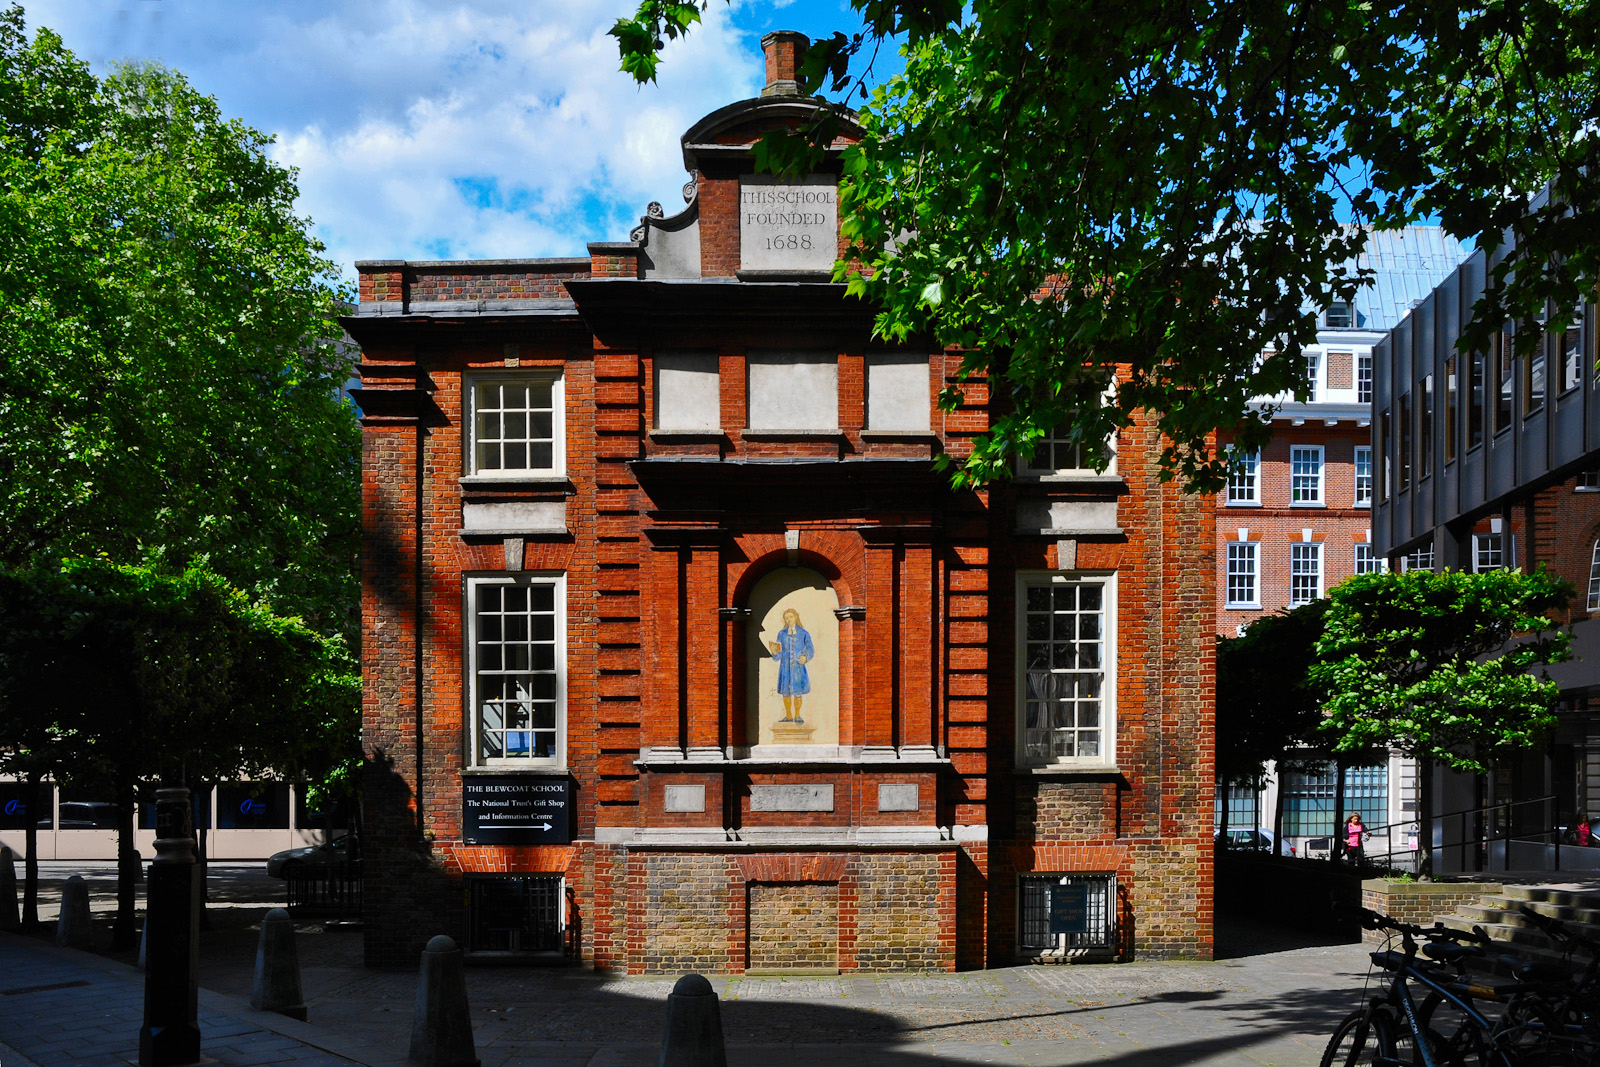 Discover London : The Bluecoat School (1)